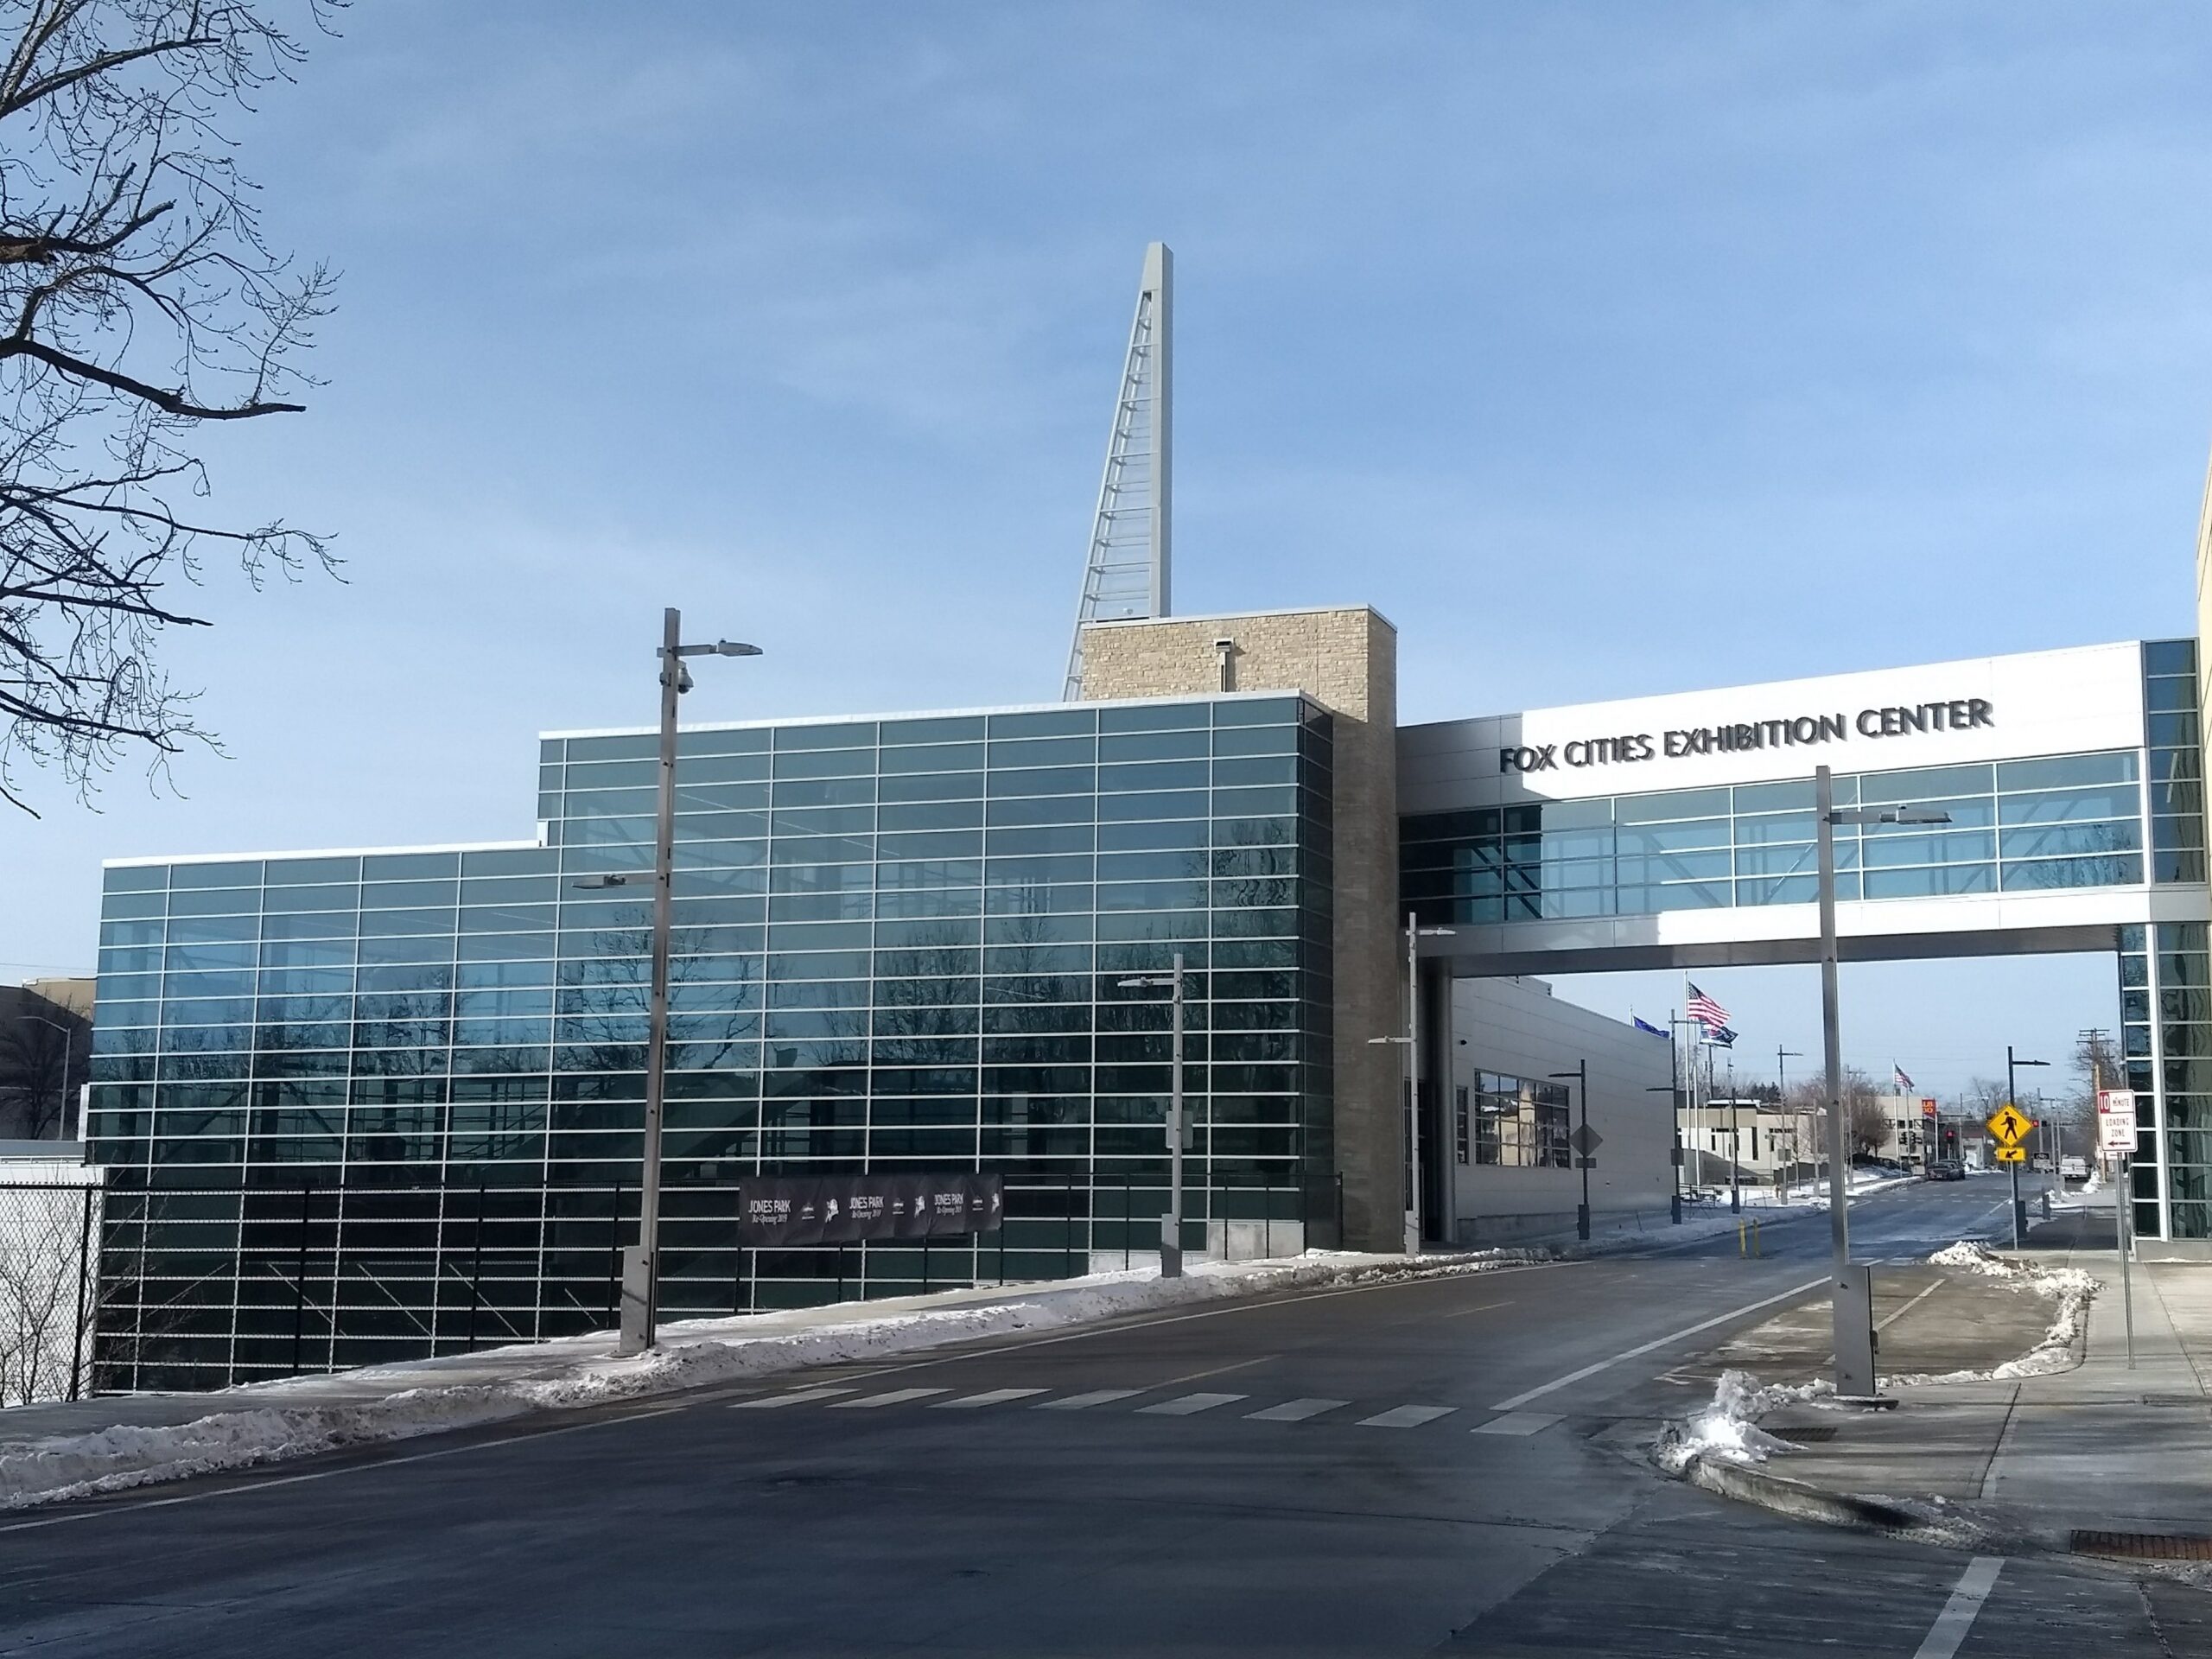 Fox Cities Exhibition Center in Appleton